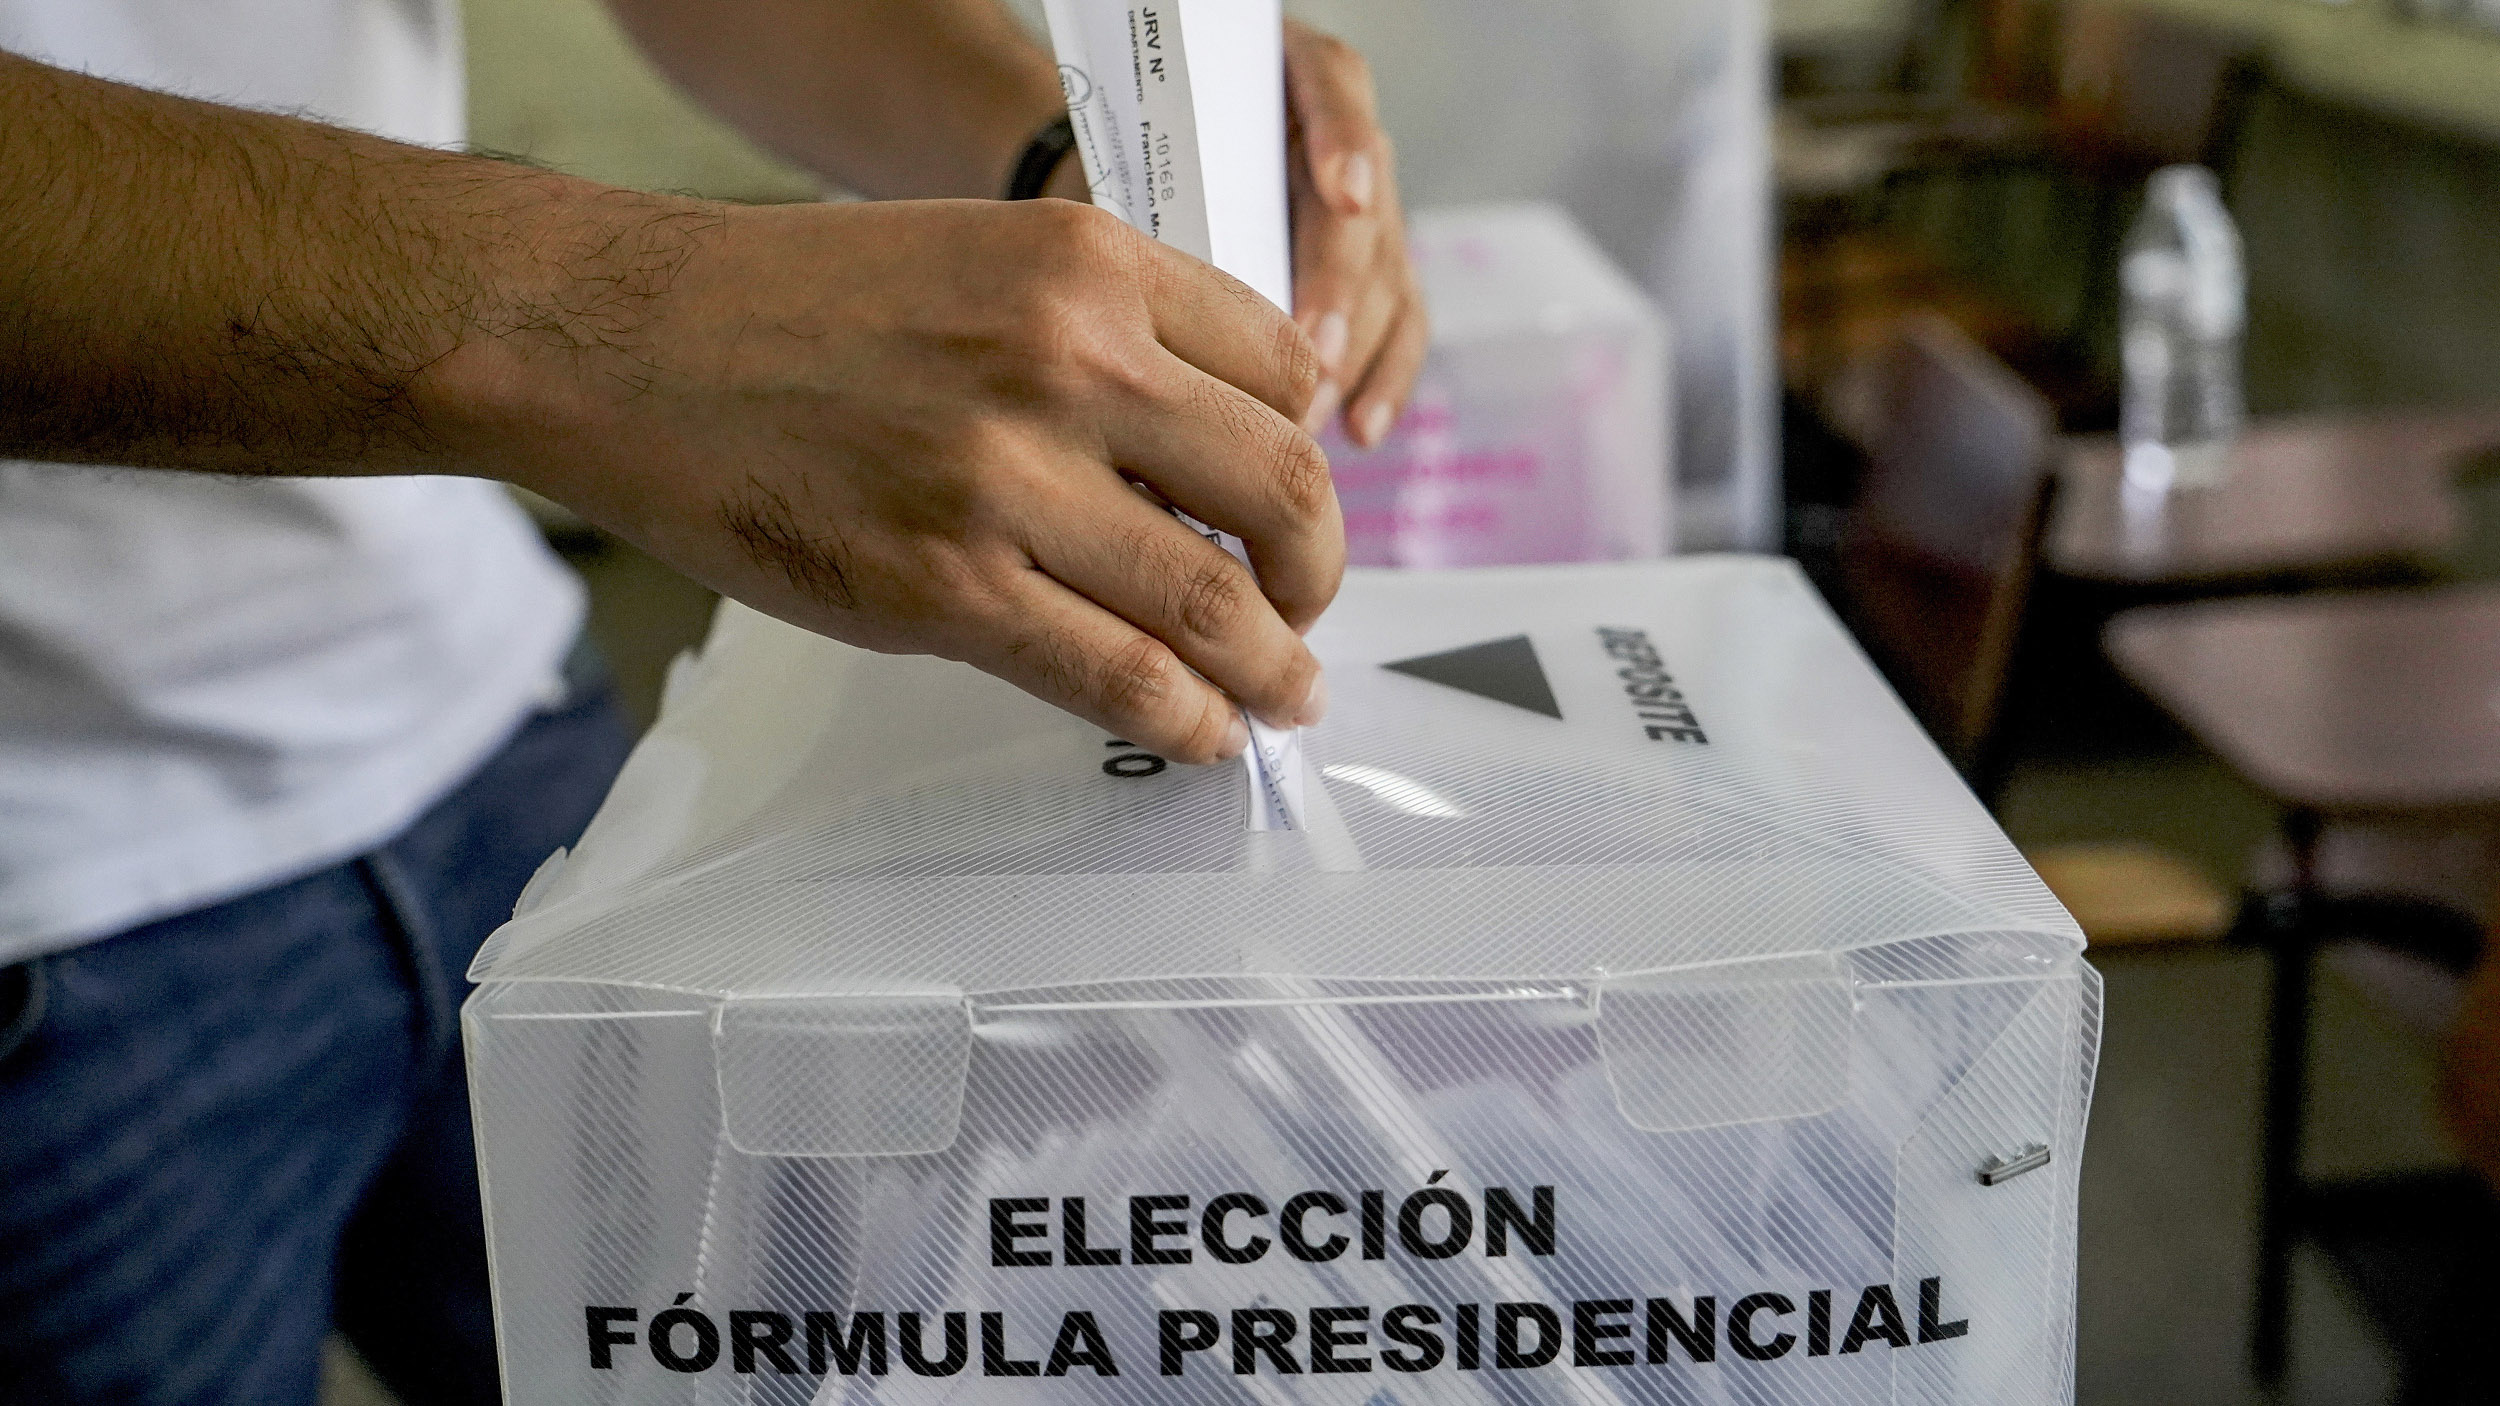 Honduras held presidential elections on Sunday - CGTN